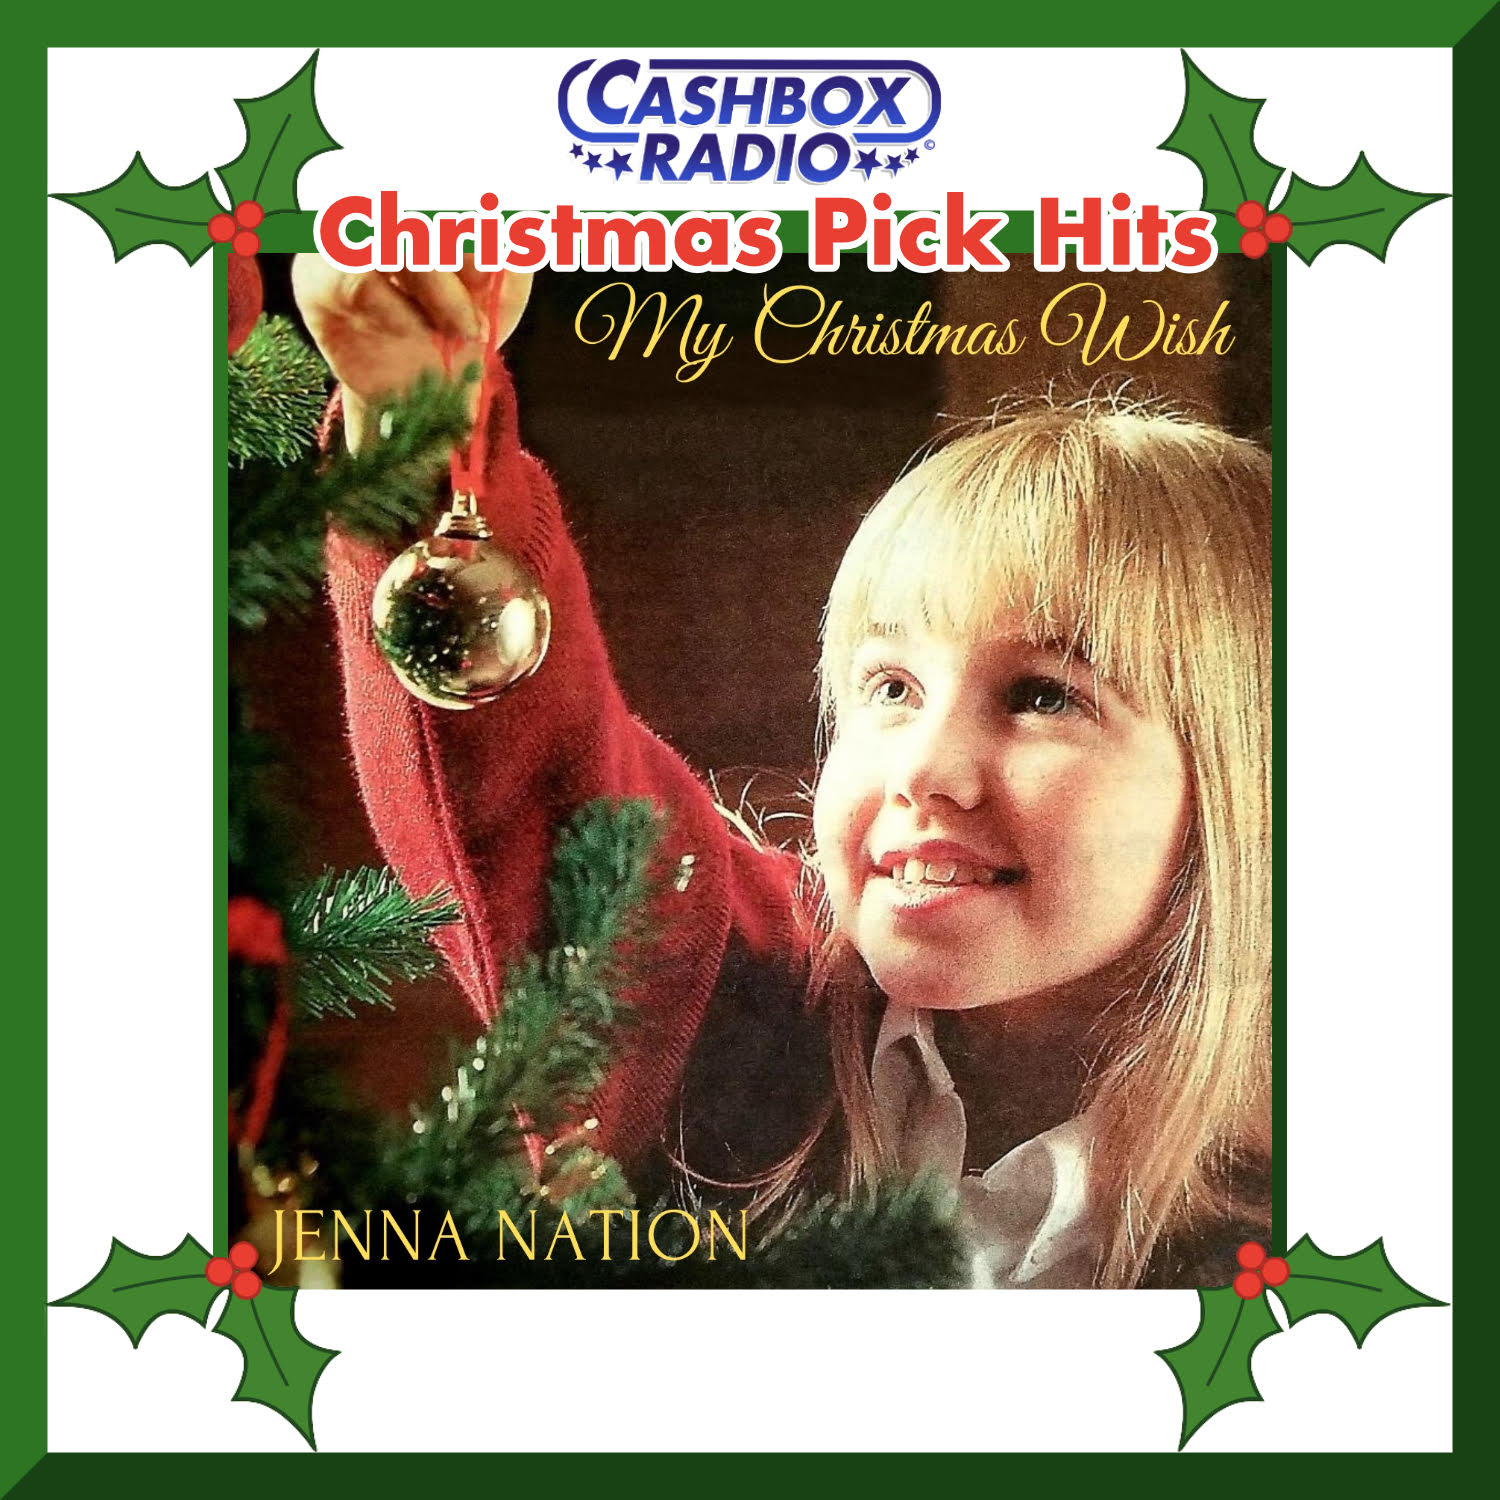 Jenna Nation - My Christmas Wish